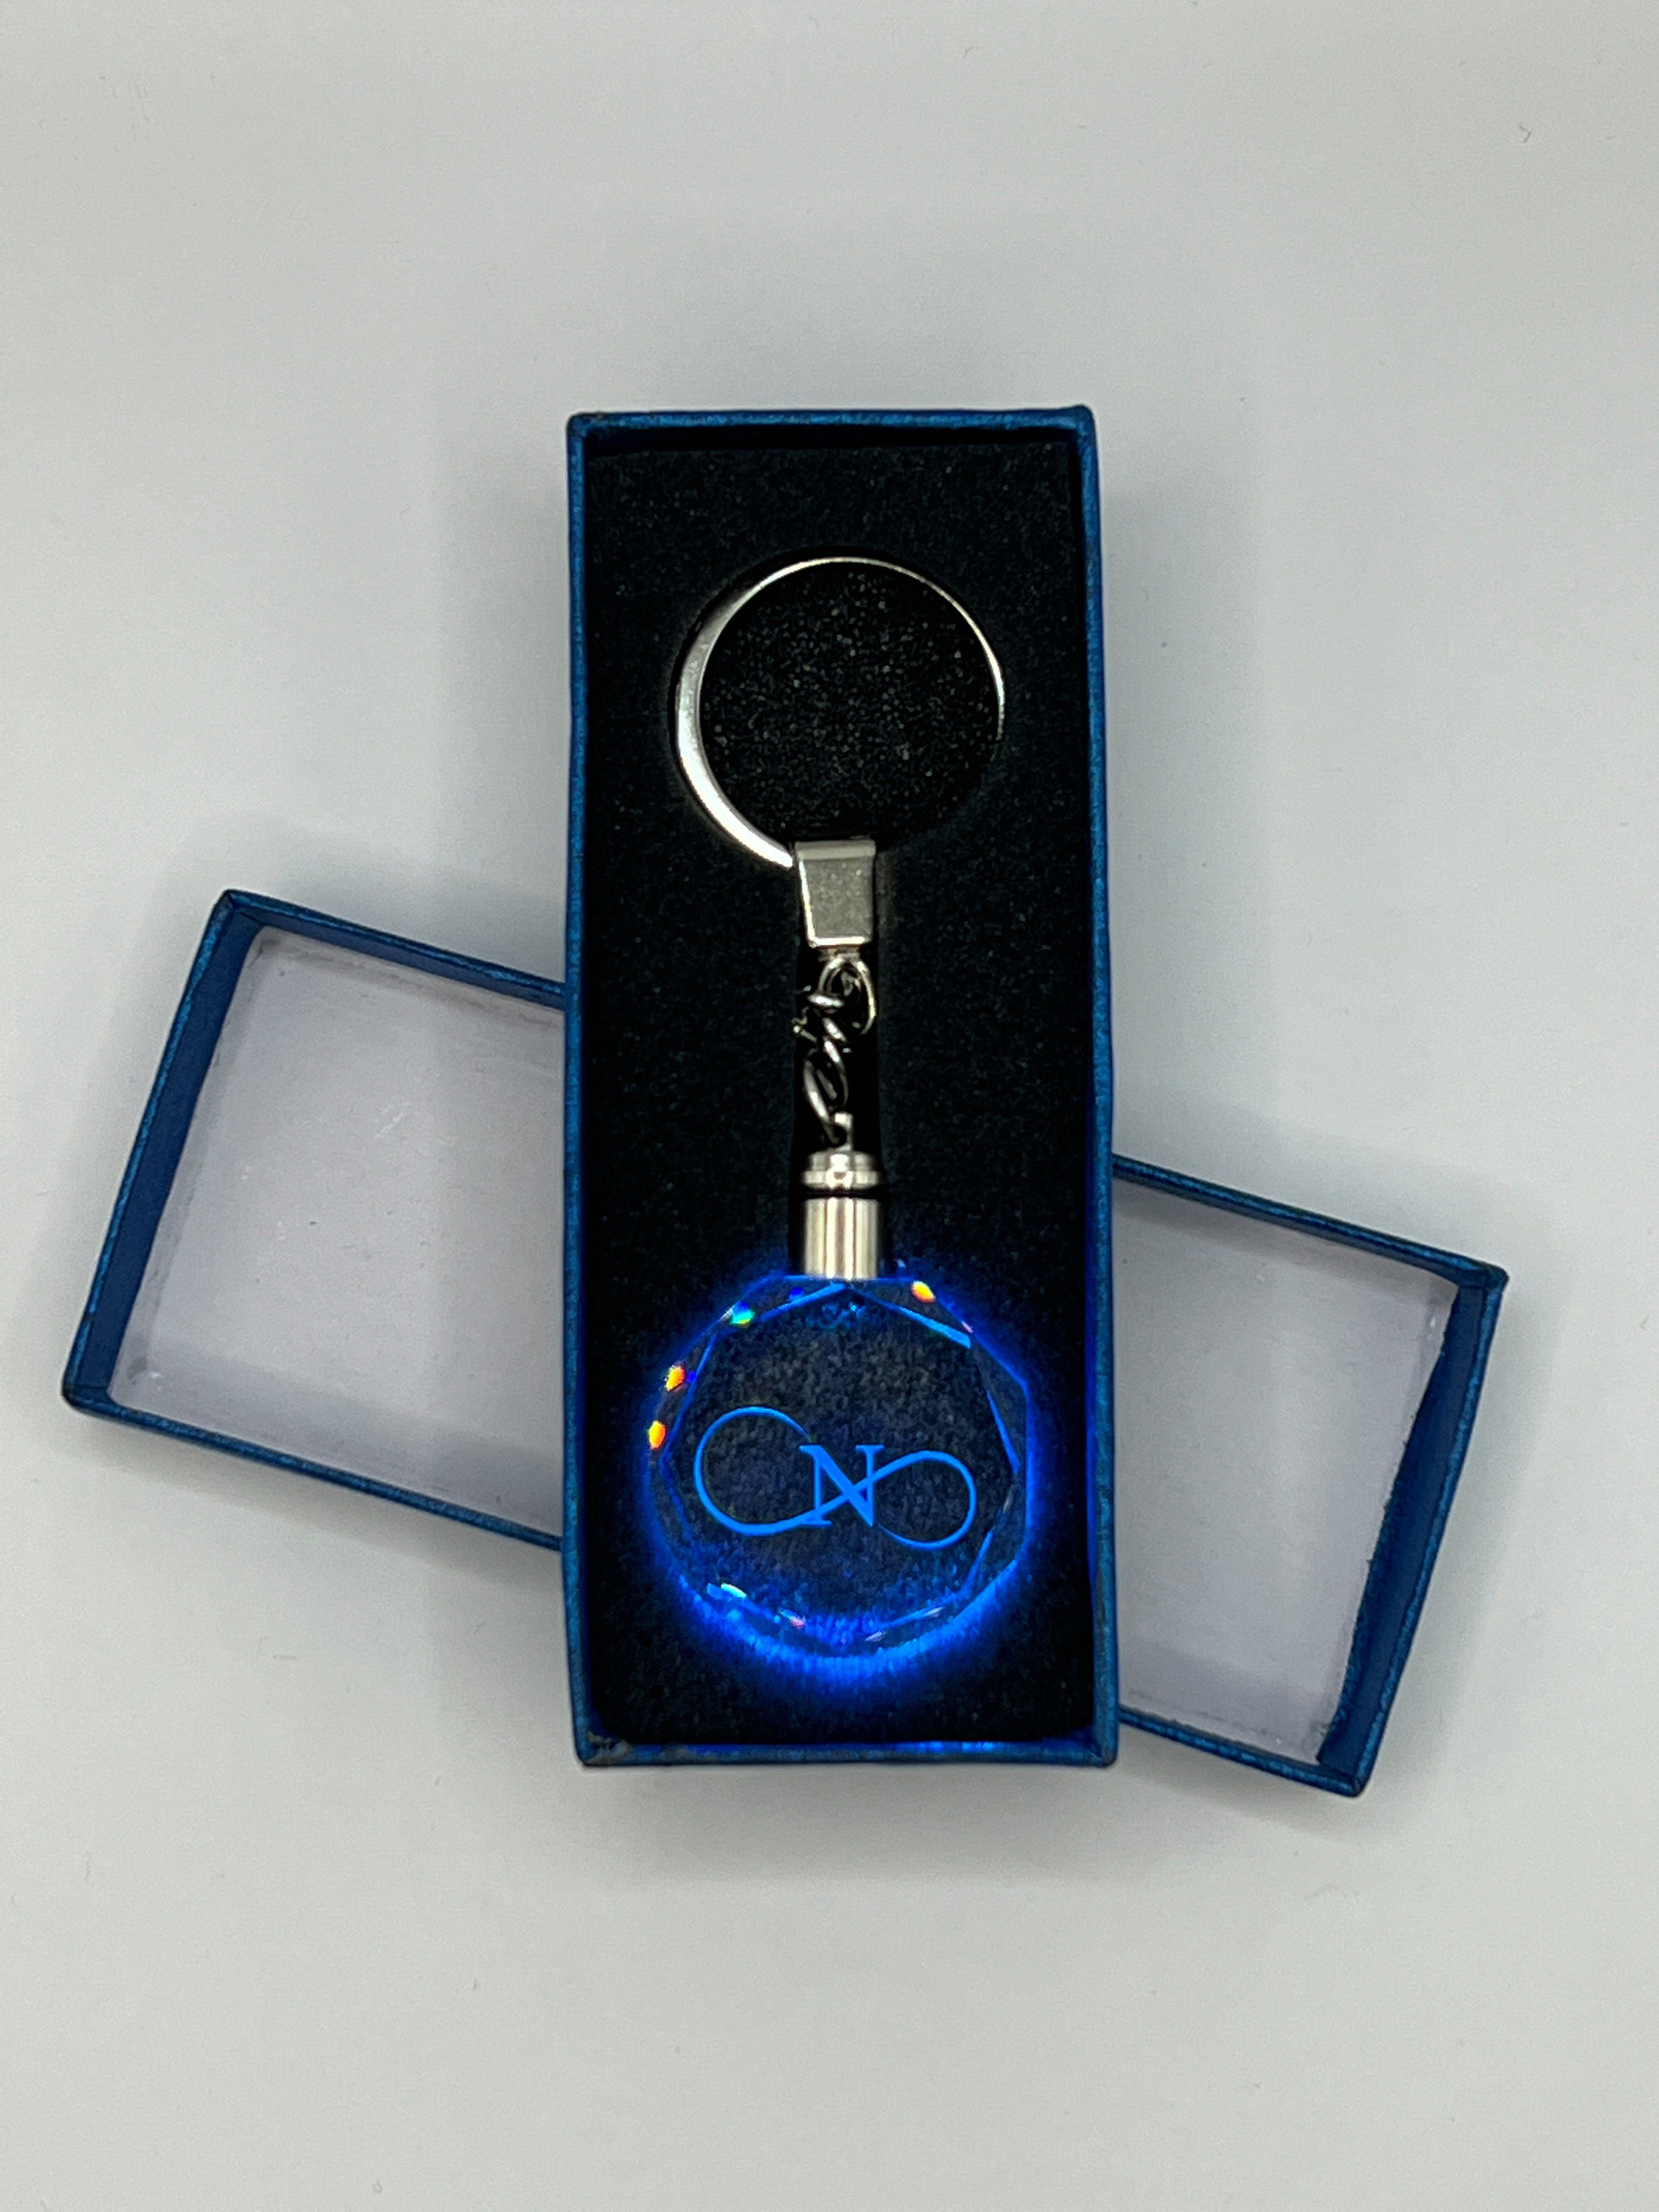 Stelby Schlüsselanhänger Unendlichkeitszeichen Schlüsselanhänger N Multicolor mit Geschenkbox | Schlüsselanhänger